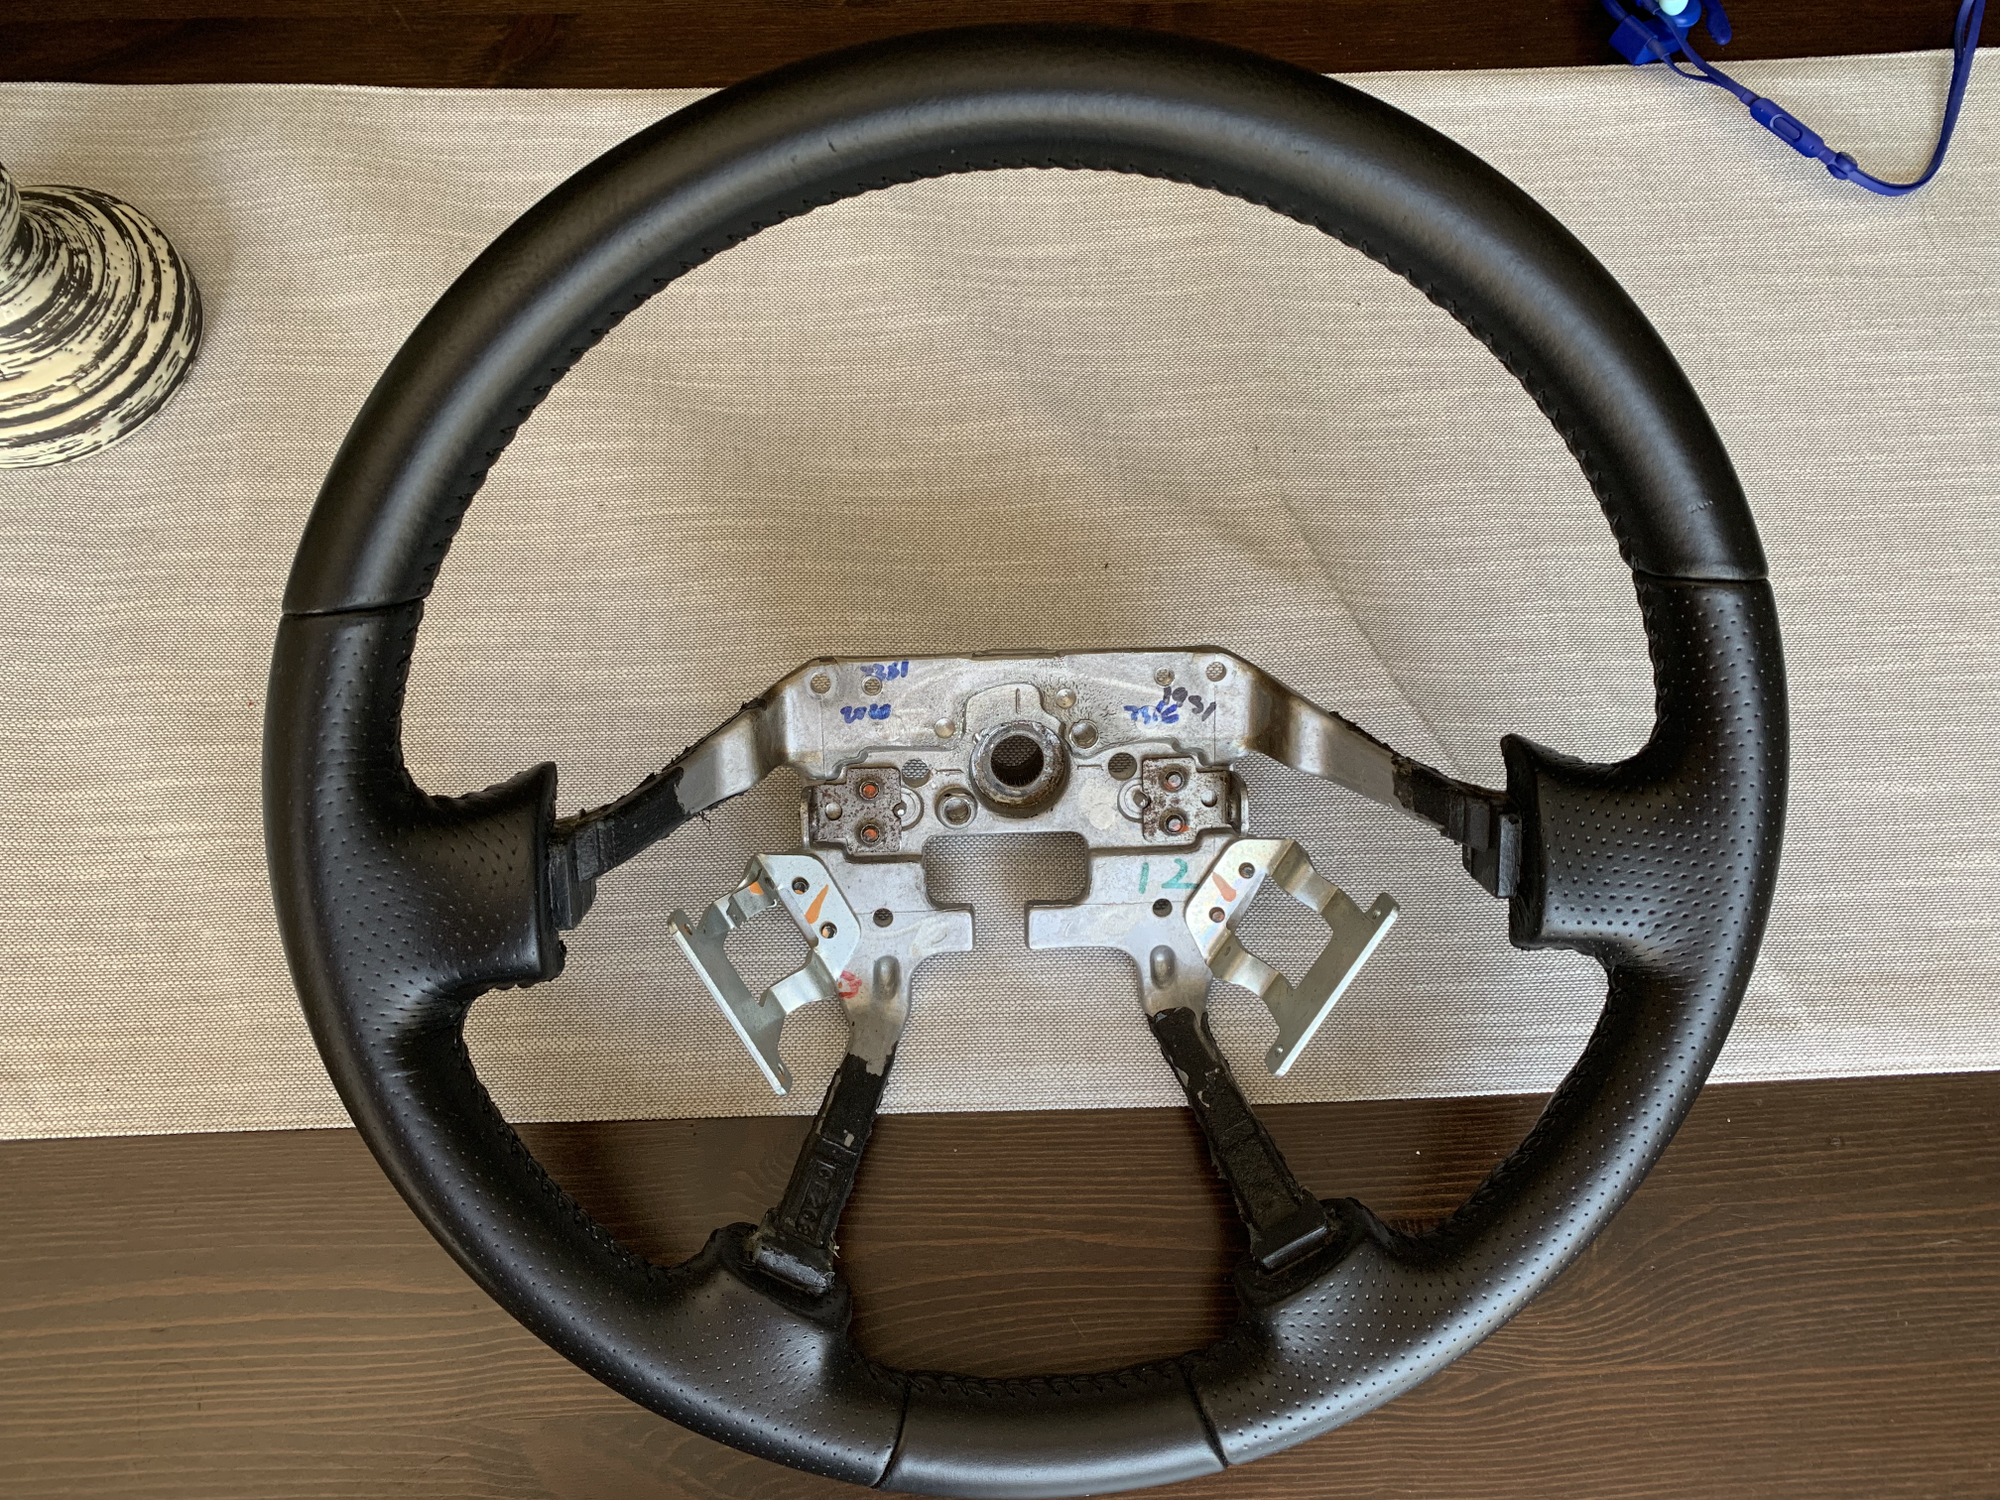 Steering/Suspension - FS: Steering wheel 78501-S3M-A82ZA - Used - 2002 to 2003 Acura TL - Newport Beach, CA 92660, United States